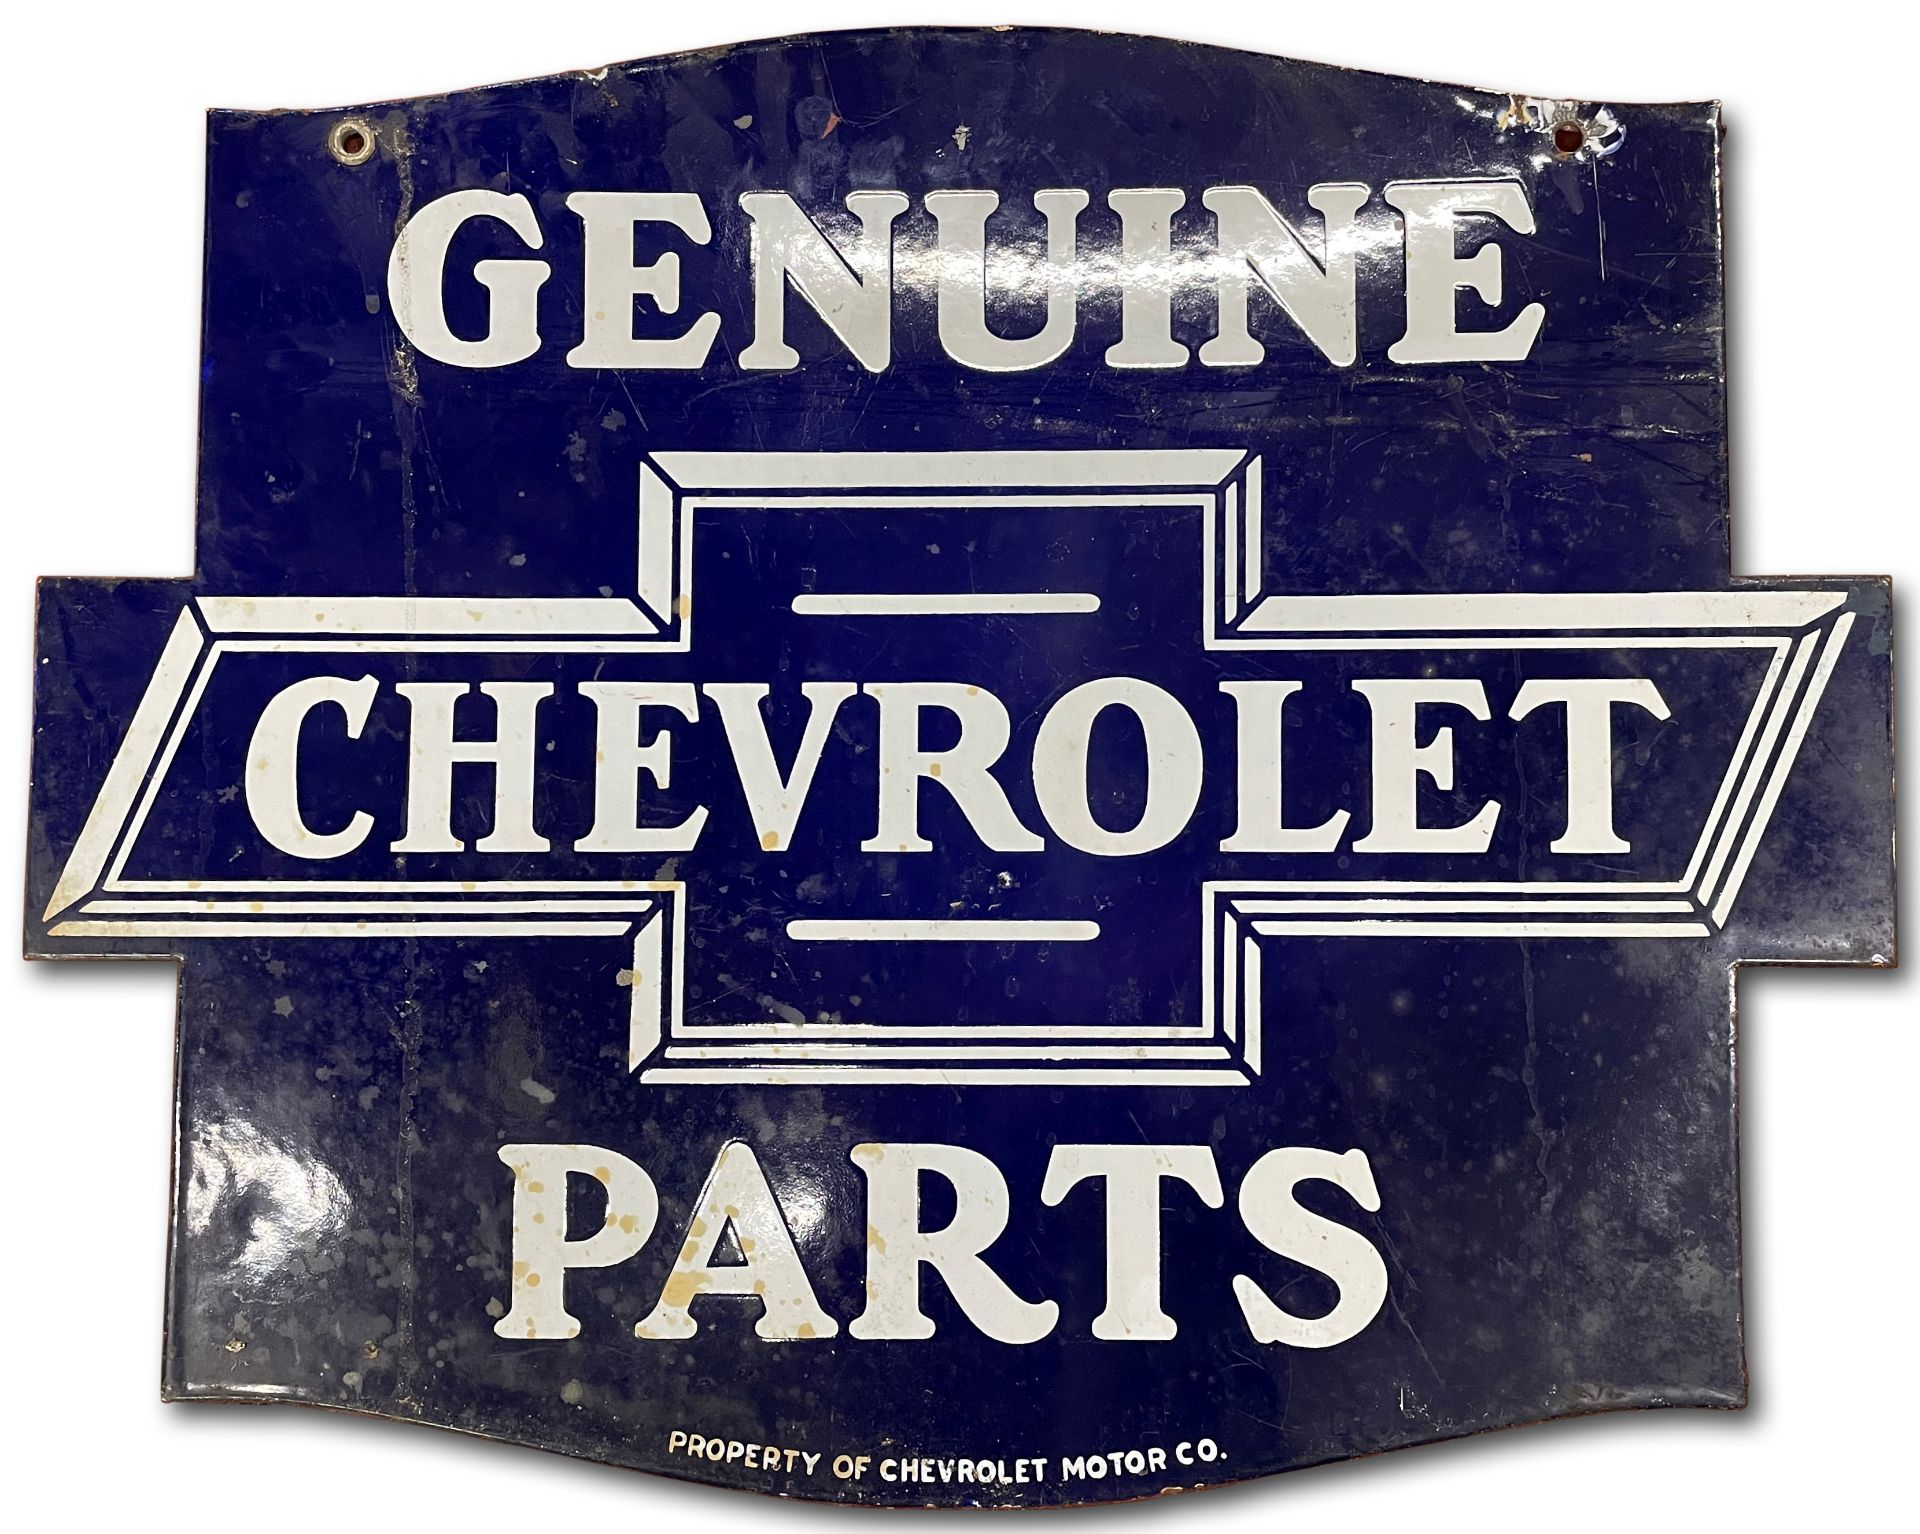 A Chevrolet Genuine Parts enamel sign,